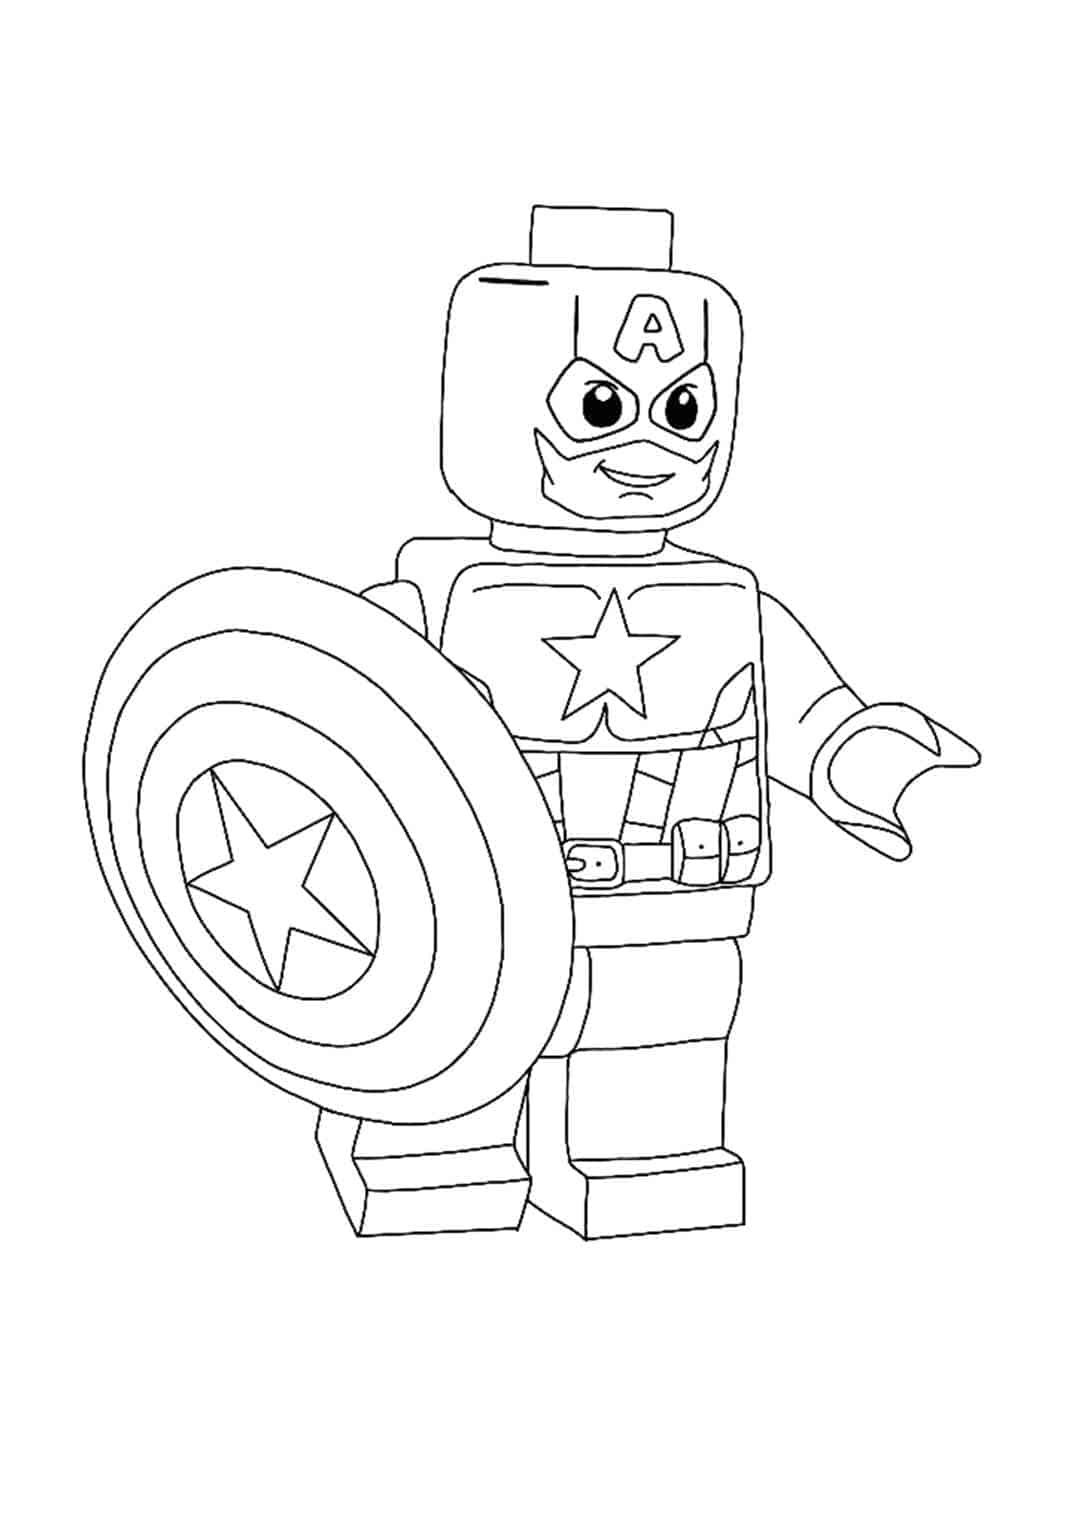 Captain America Lego kleurplaat